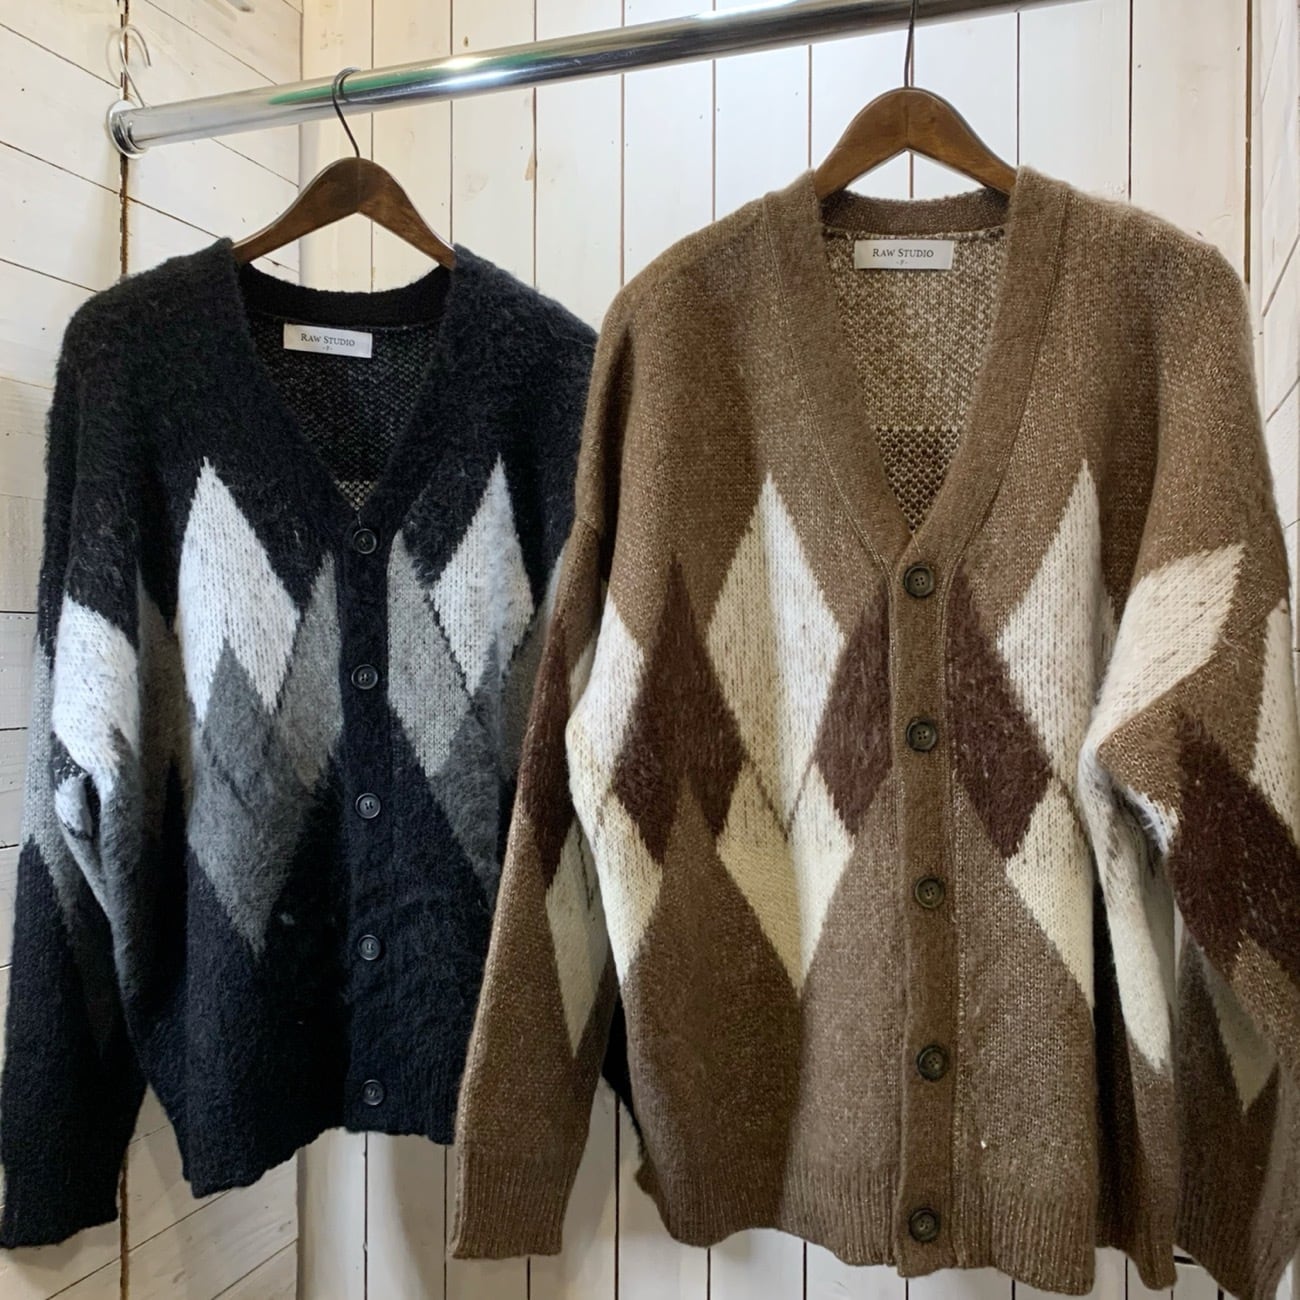 VT-00851-2】Argyle pattern mohair knit cardigan / アーガイル柄